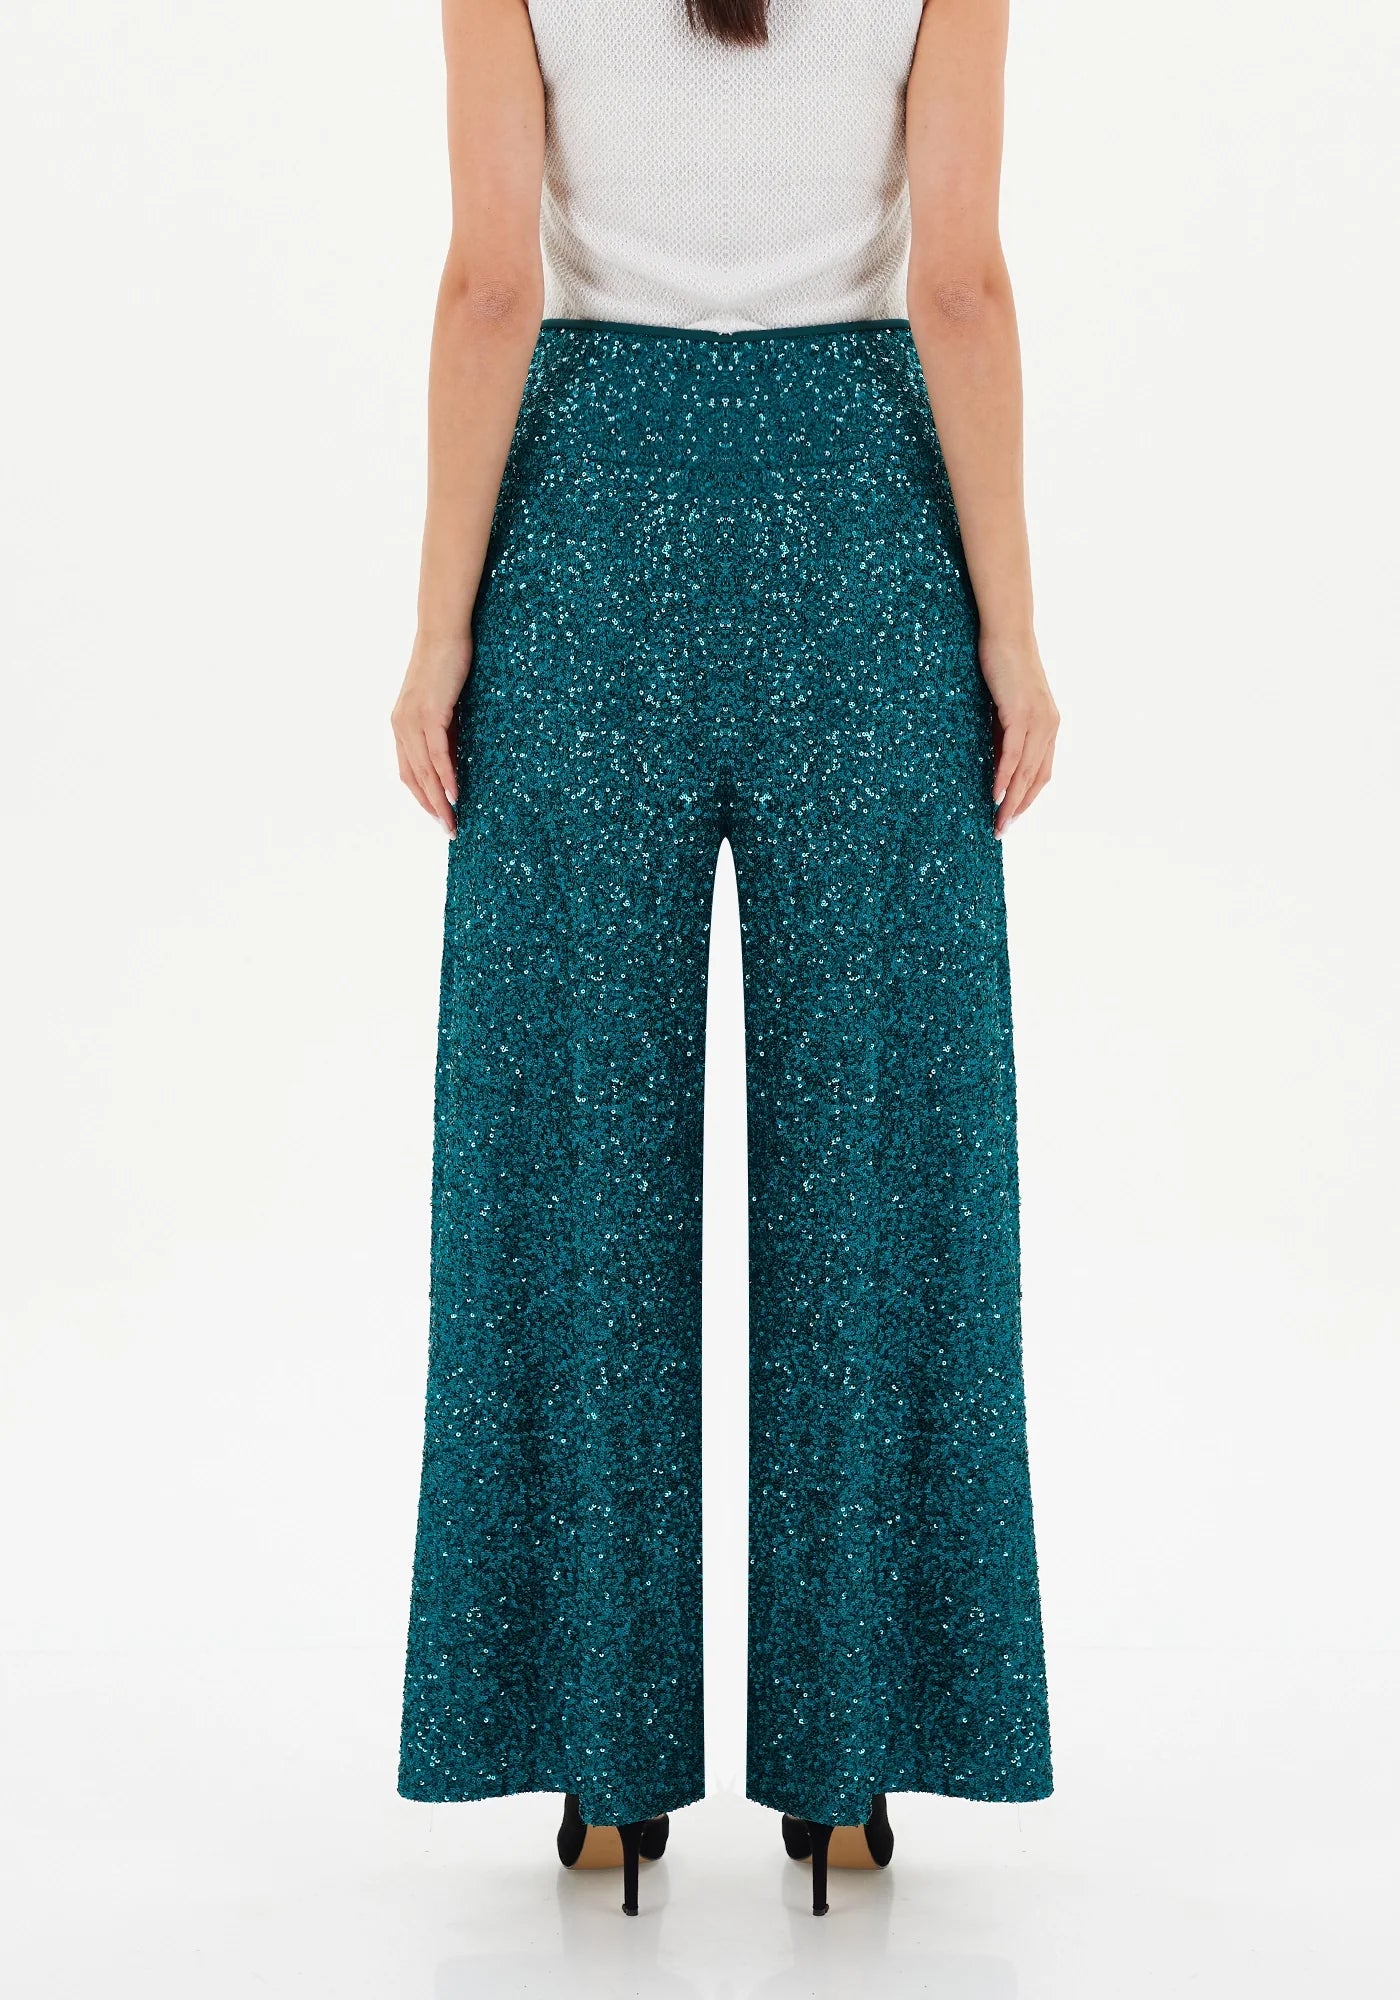 G-Line-Sparkle-Green-Sequin-Pants-for-Women